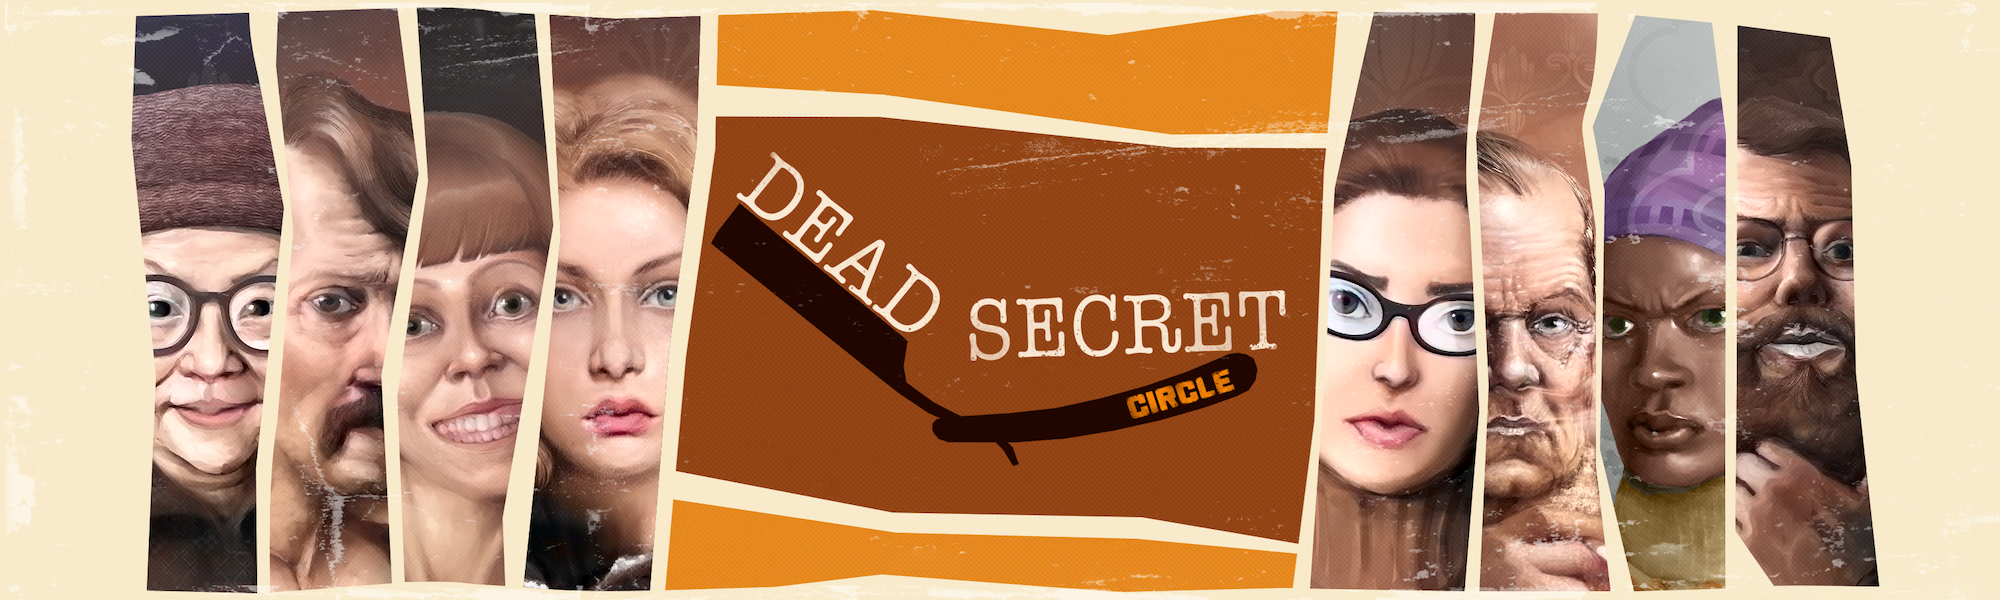 Dead Secret Circle (Demo)